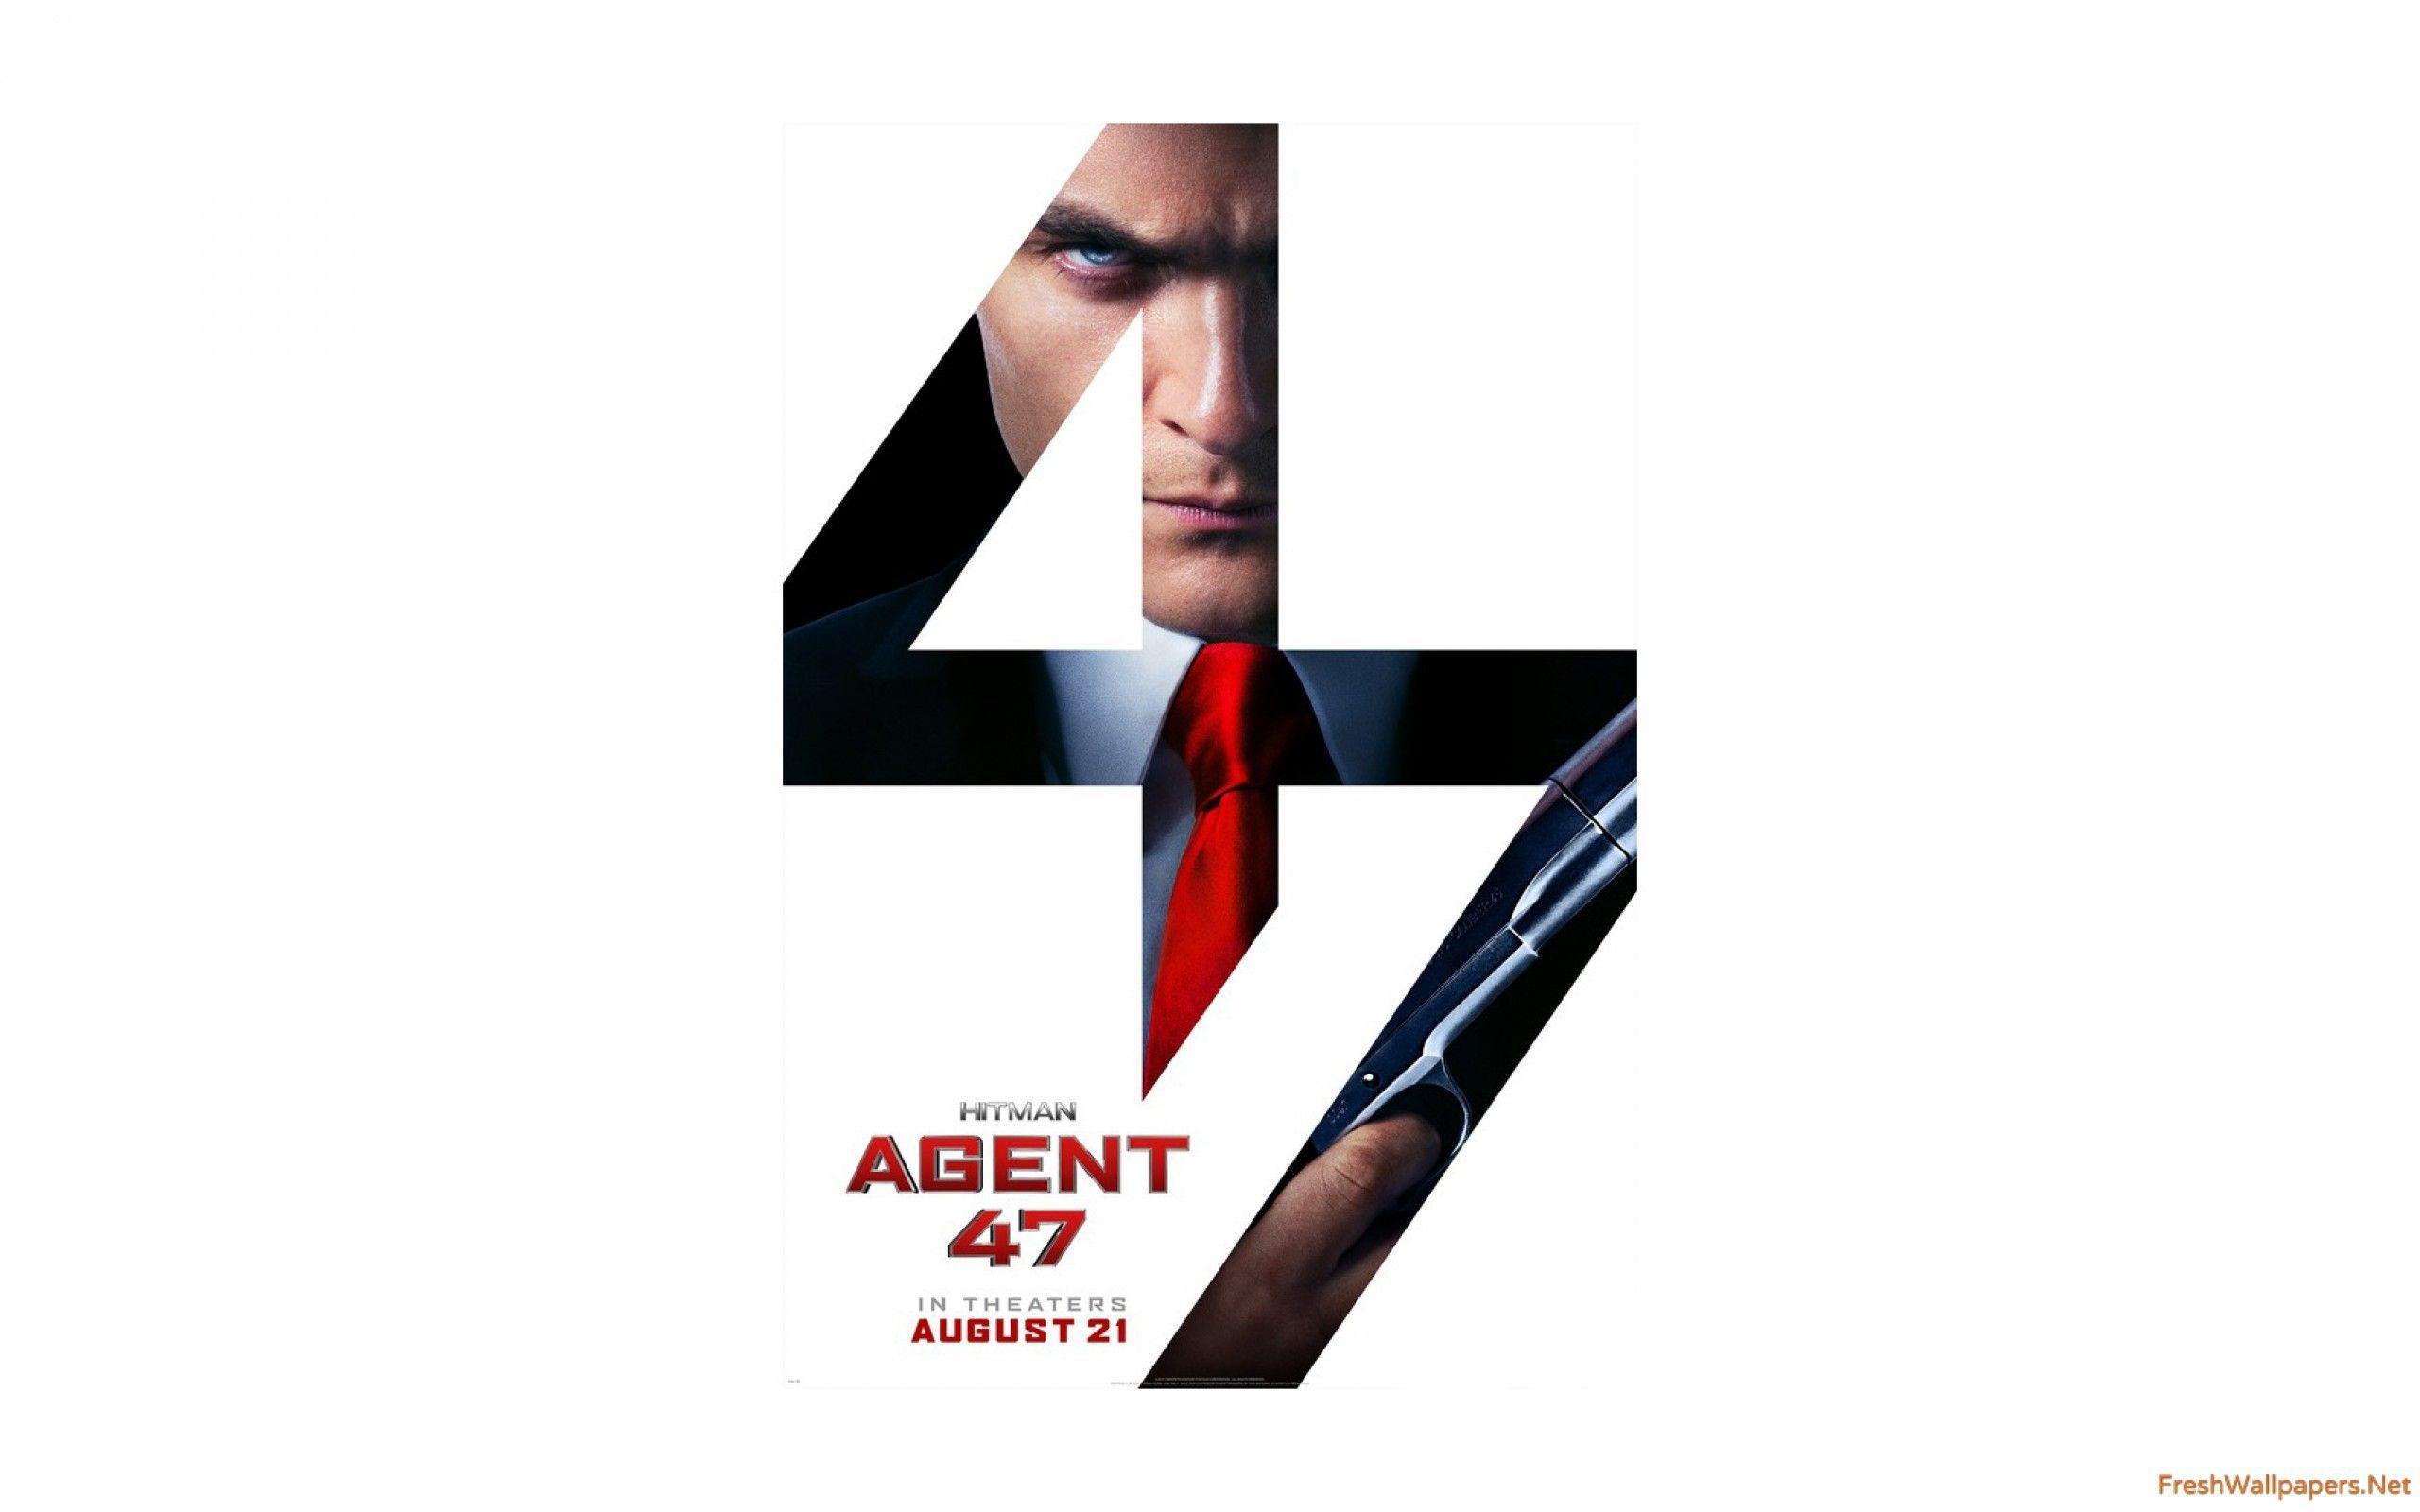 Hitman: Agent 47 Wallpapers